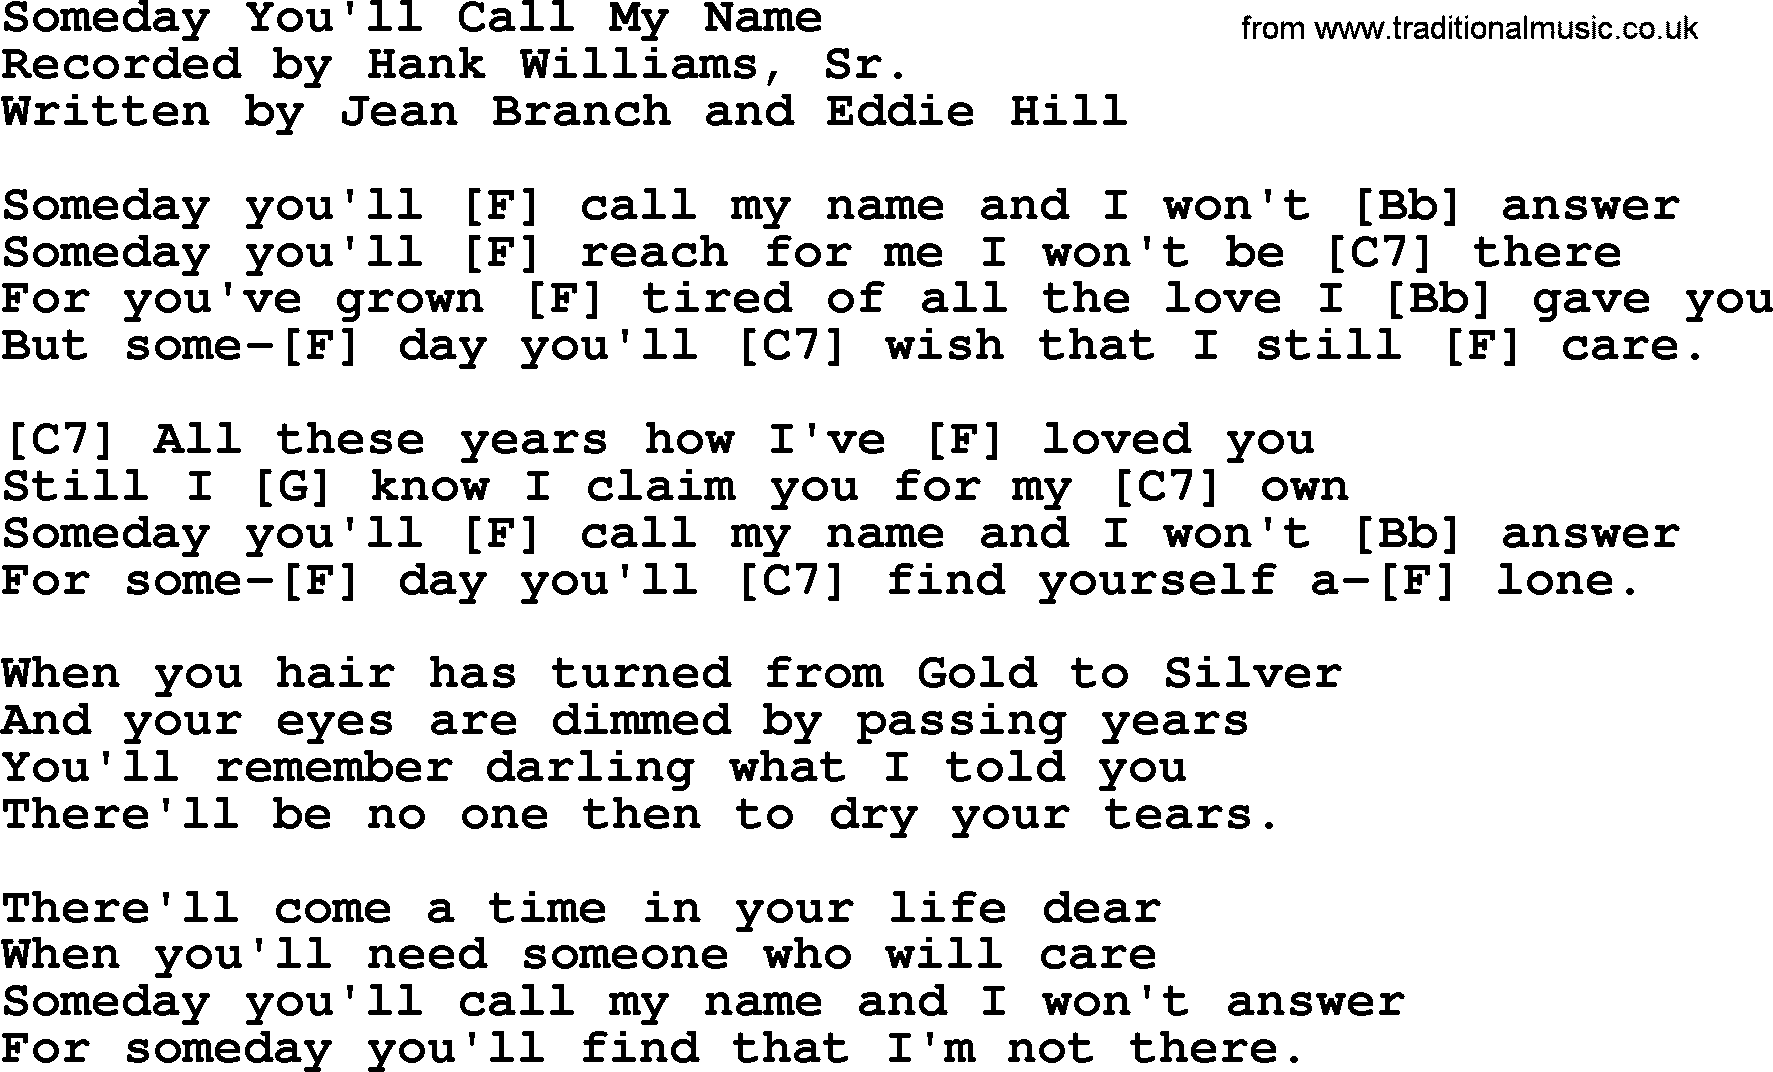 Hank Williams song Someday You'll Call My Name, lyrics and chords